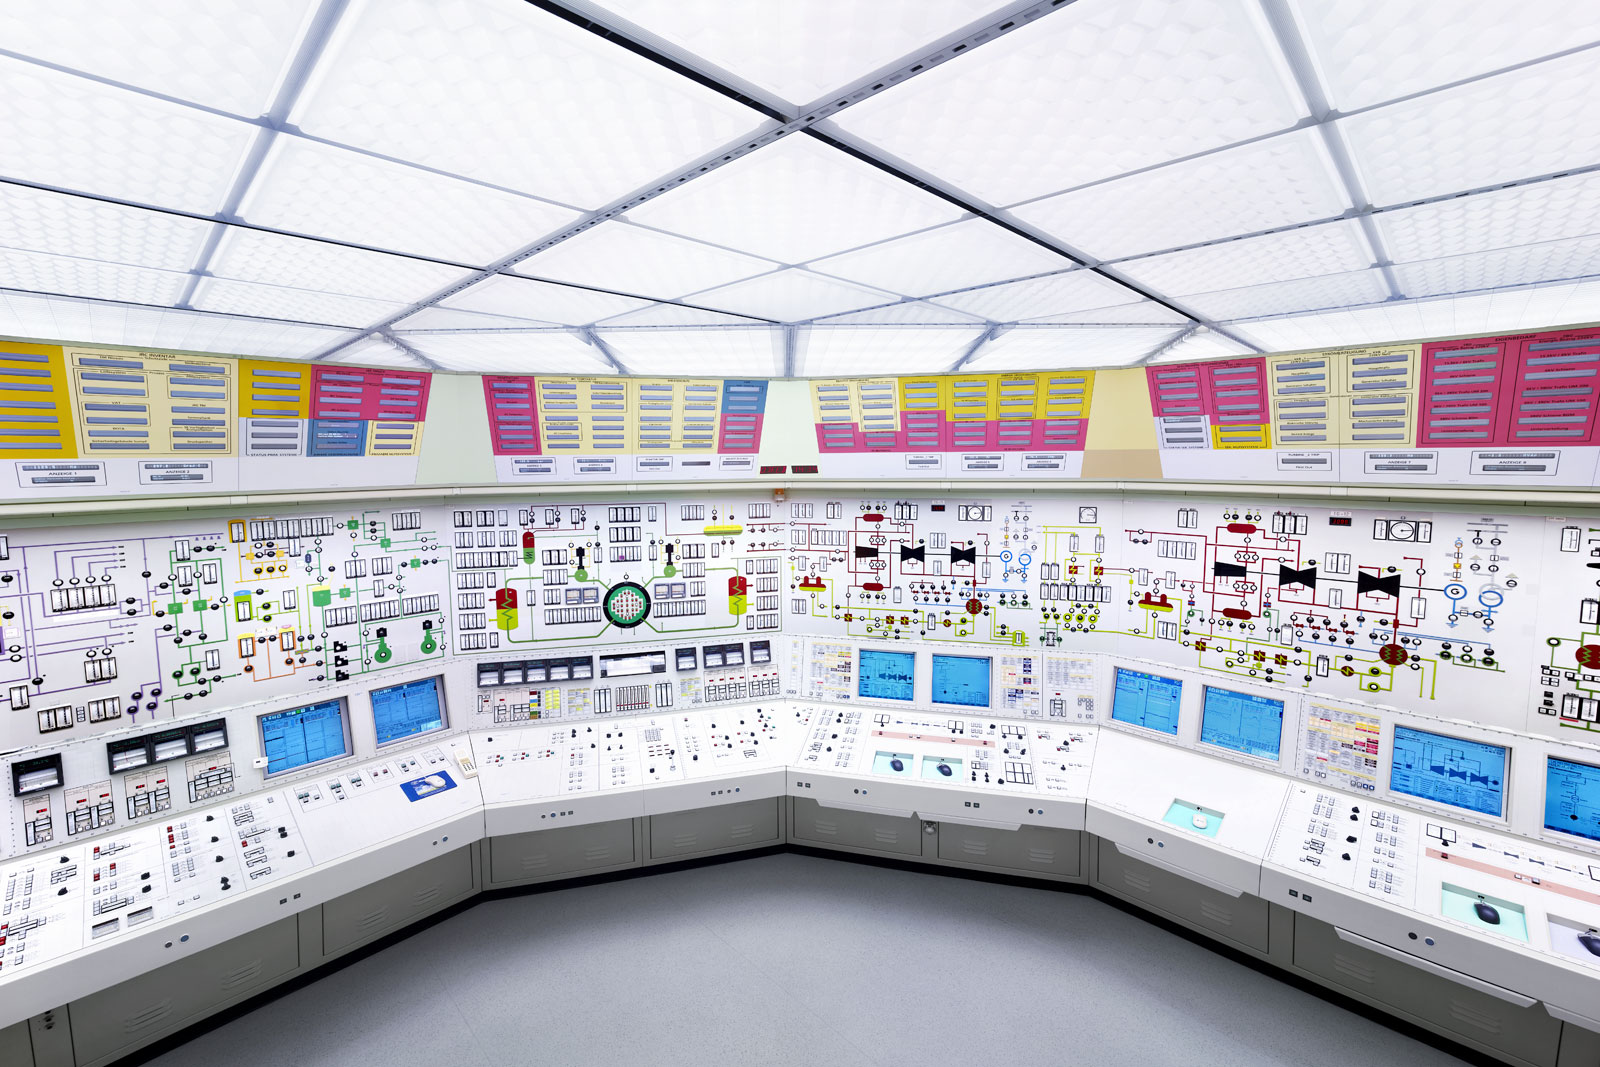 Beznau I Nuclear power plant, control room 2011